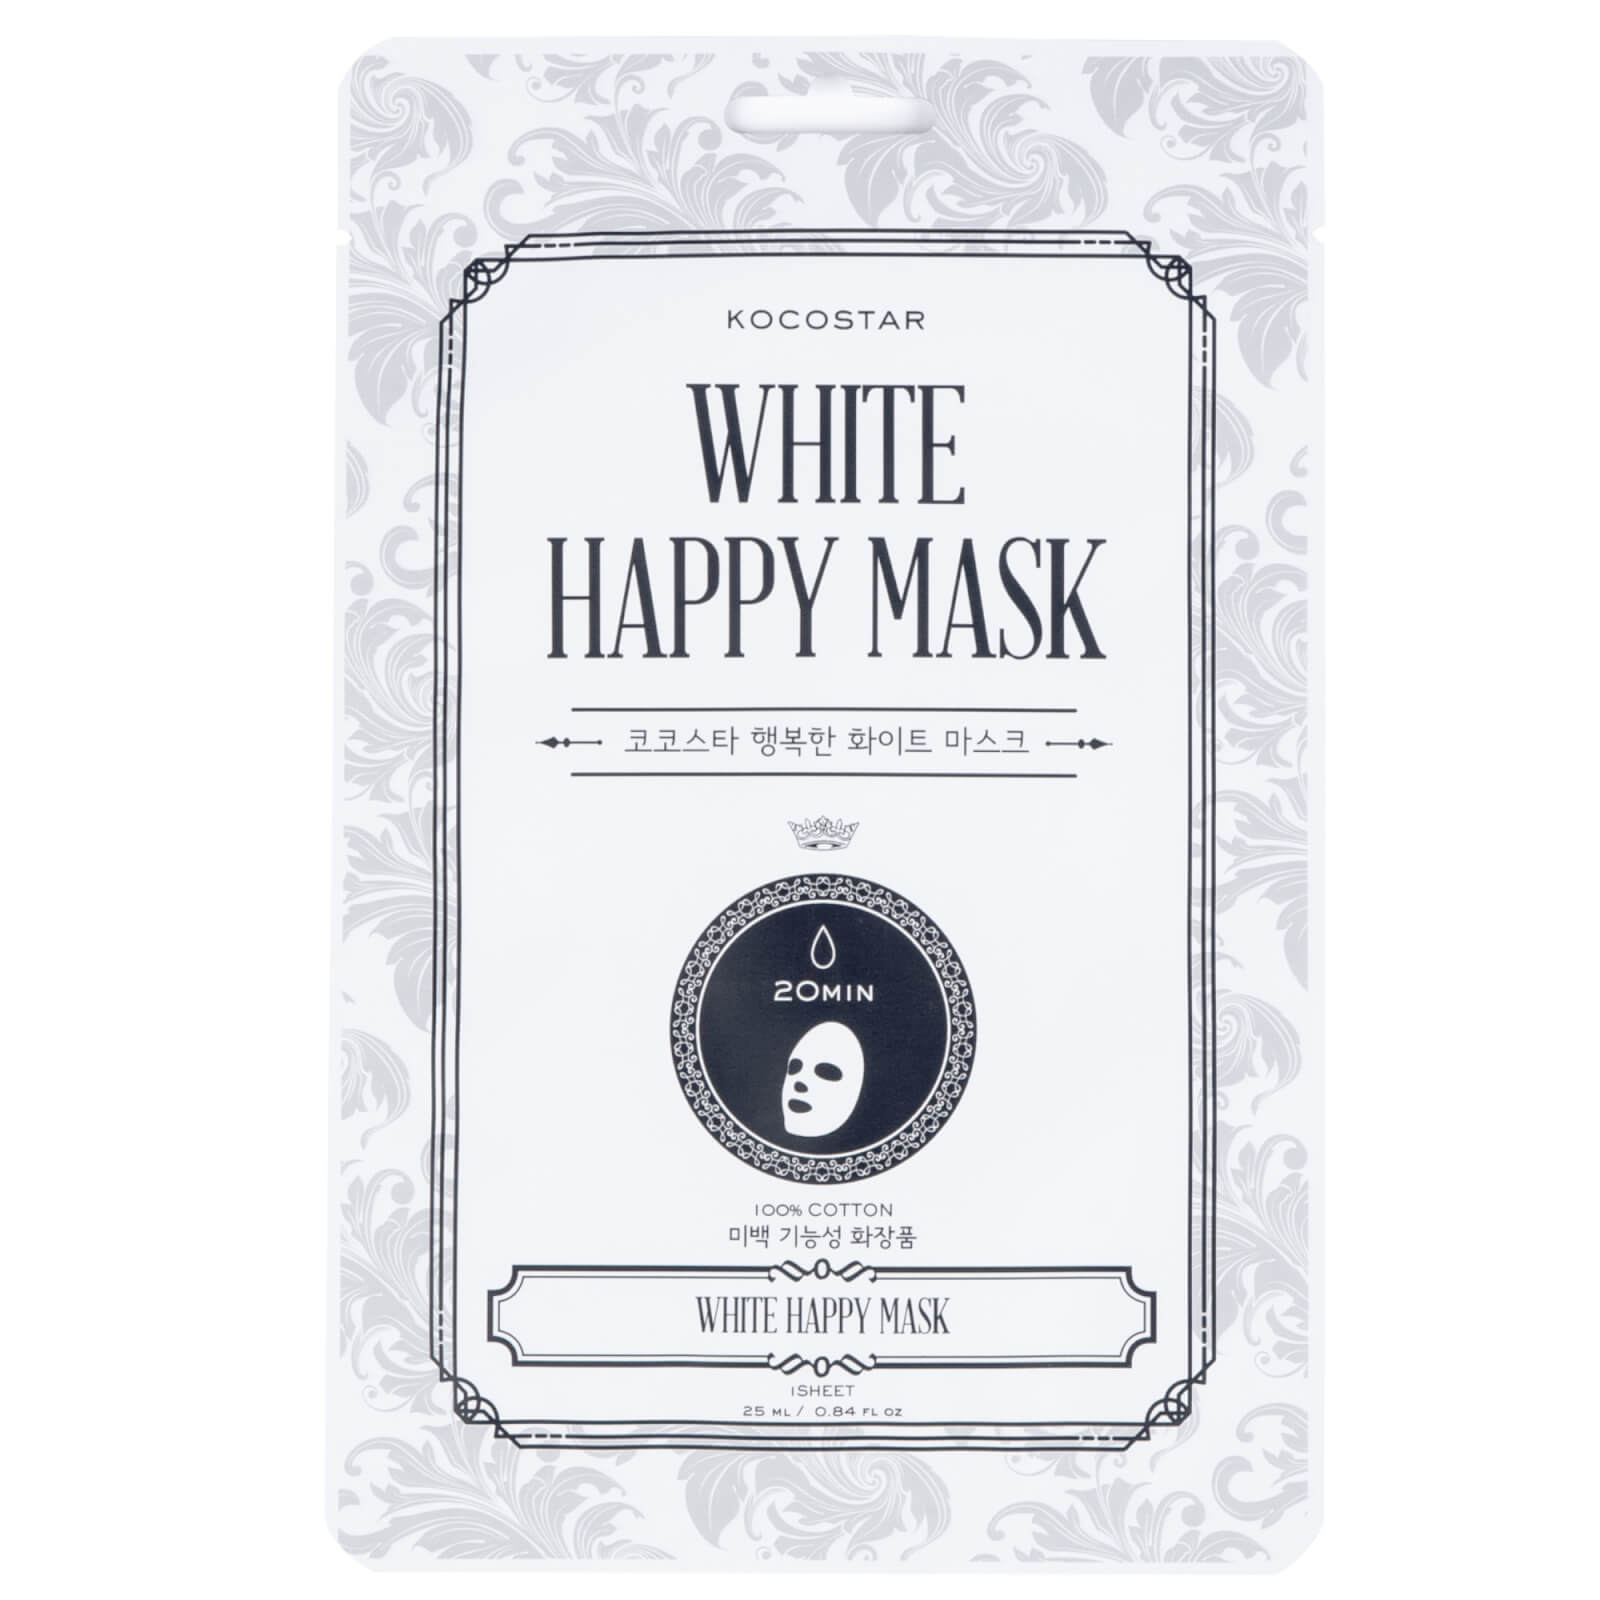 Kocostar White Happy Mask lookfantastic.com imagine